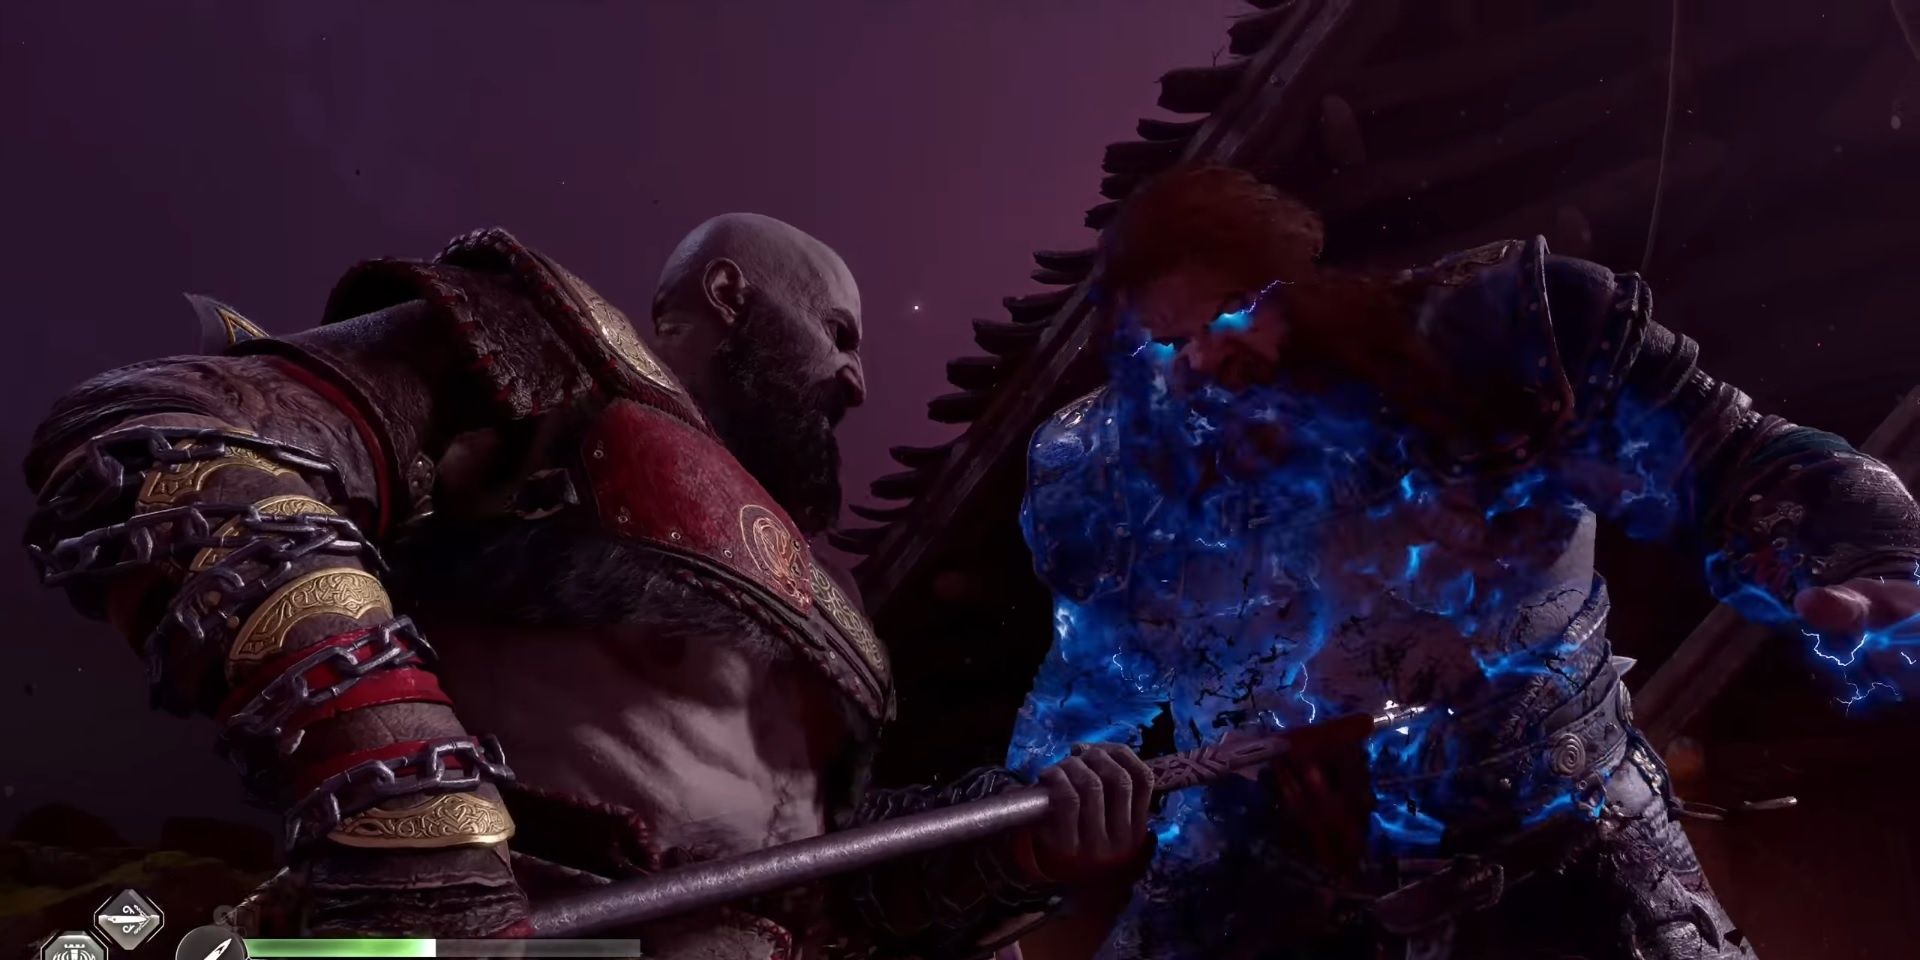 Kratos piercing Thor with the Draupnir Spear, in God of War Ragnarok